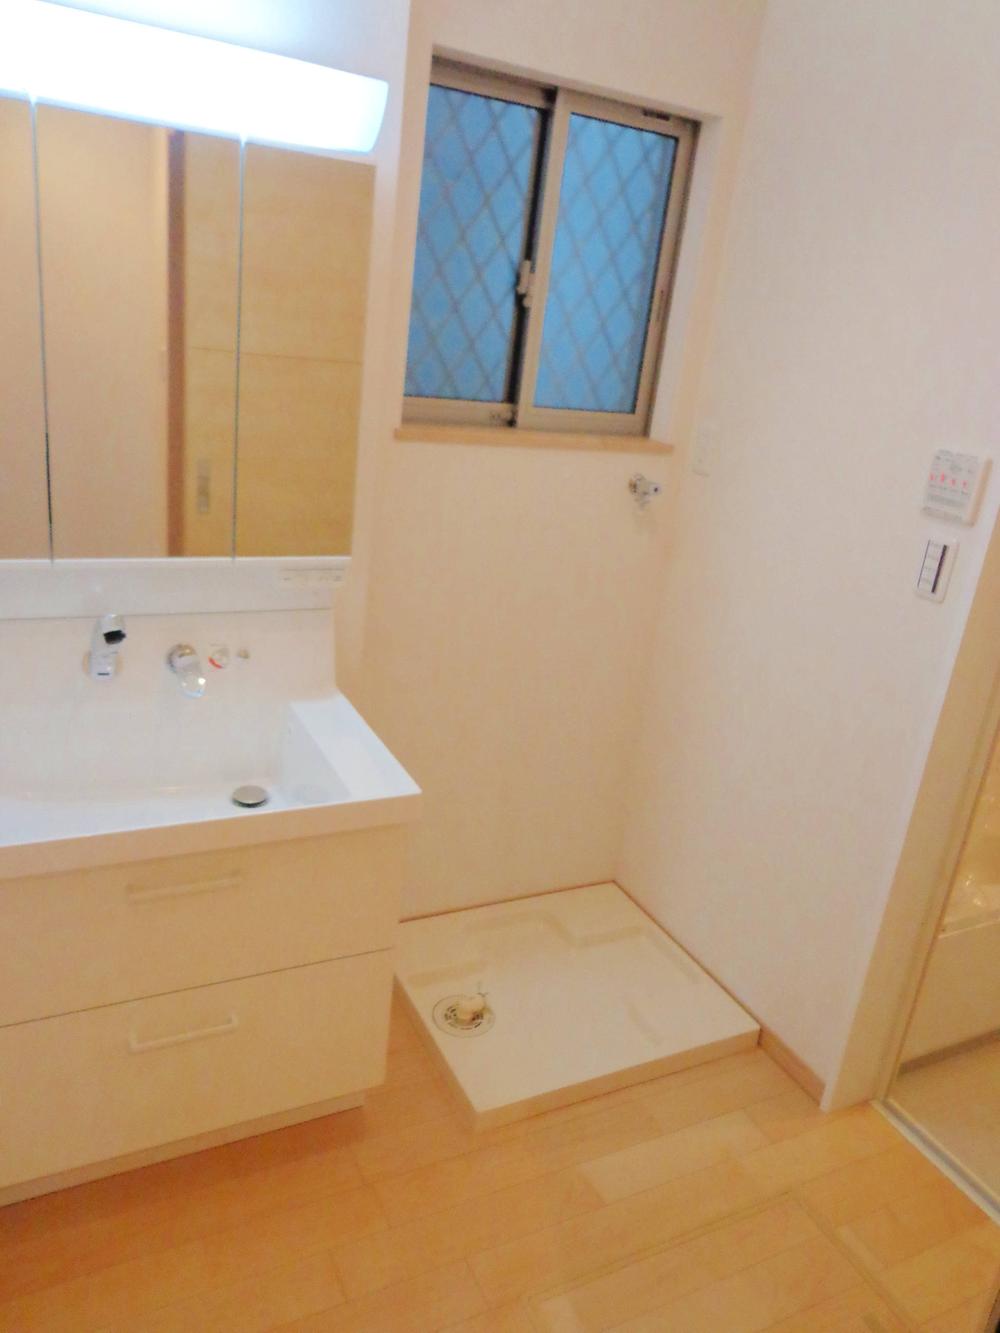 Wash basin, toilet. Vanity of three-sided mirror type.